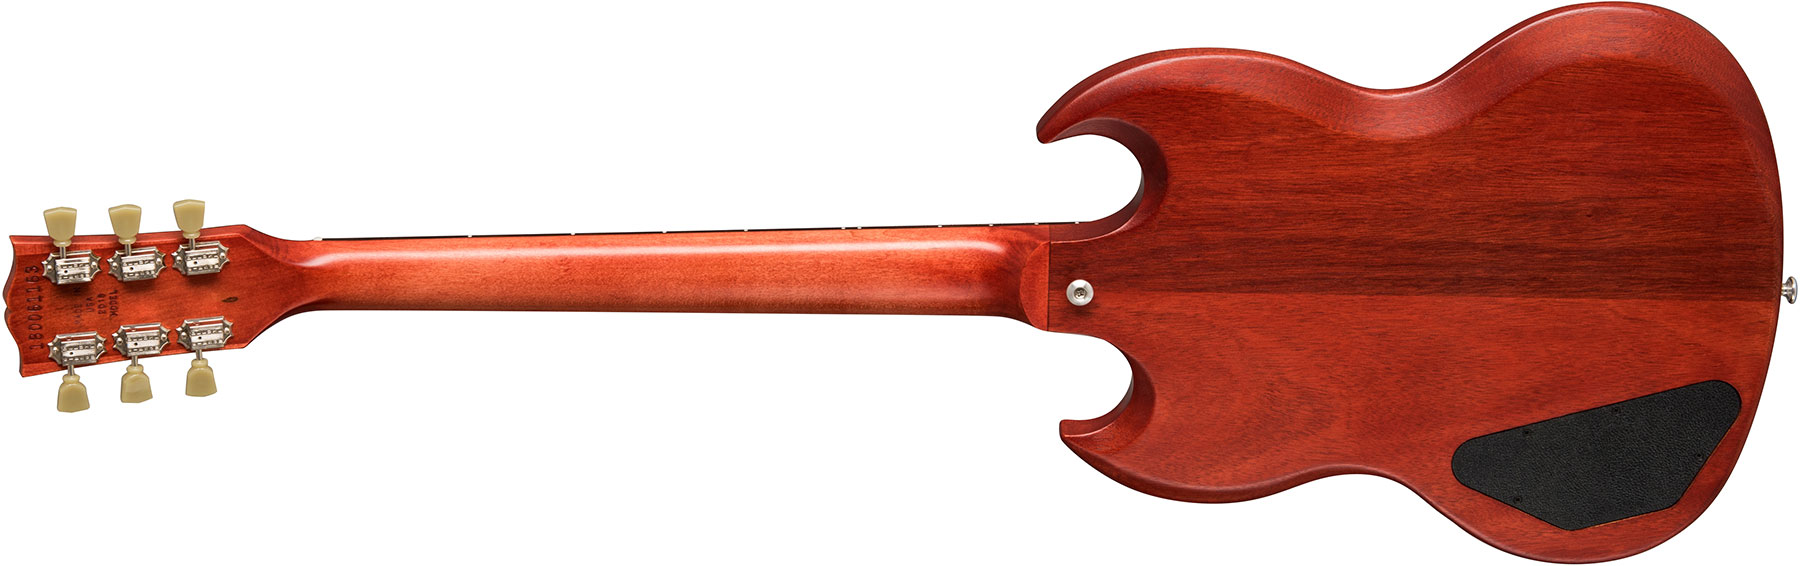 Gibson Sg Standard Tribute - Vintage Cherry Satin - Guitarra eléctrica de doble corte. - Variation 2